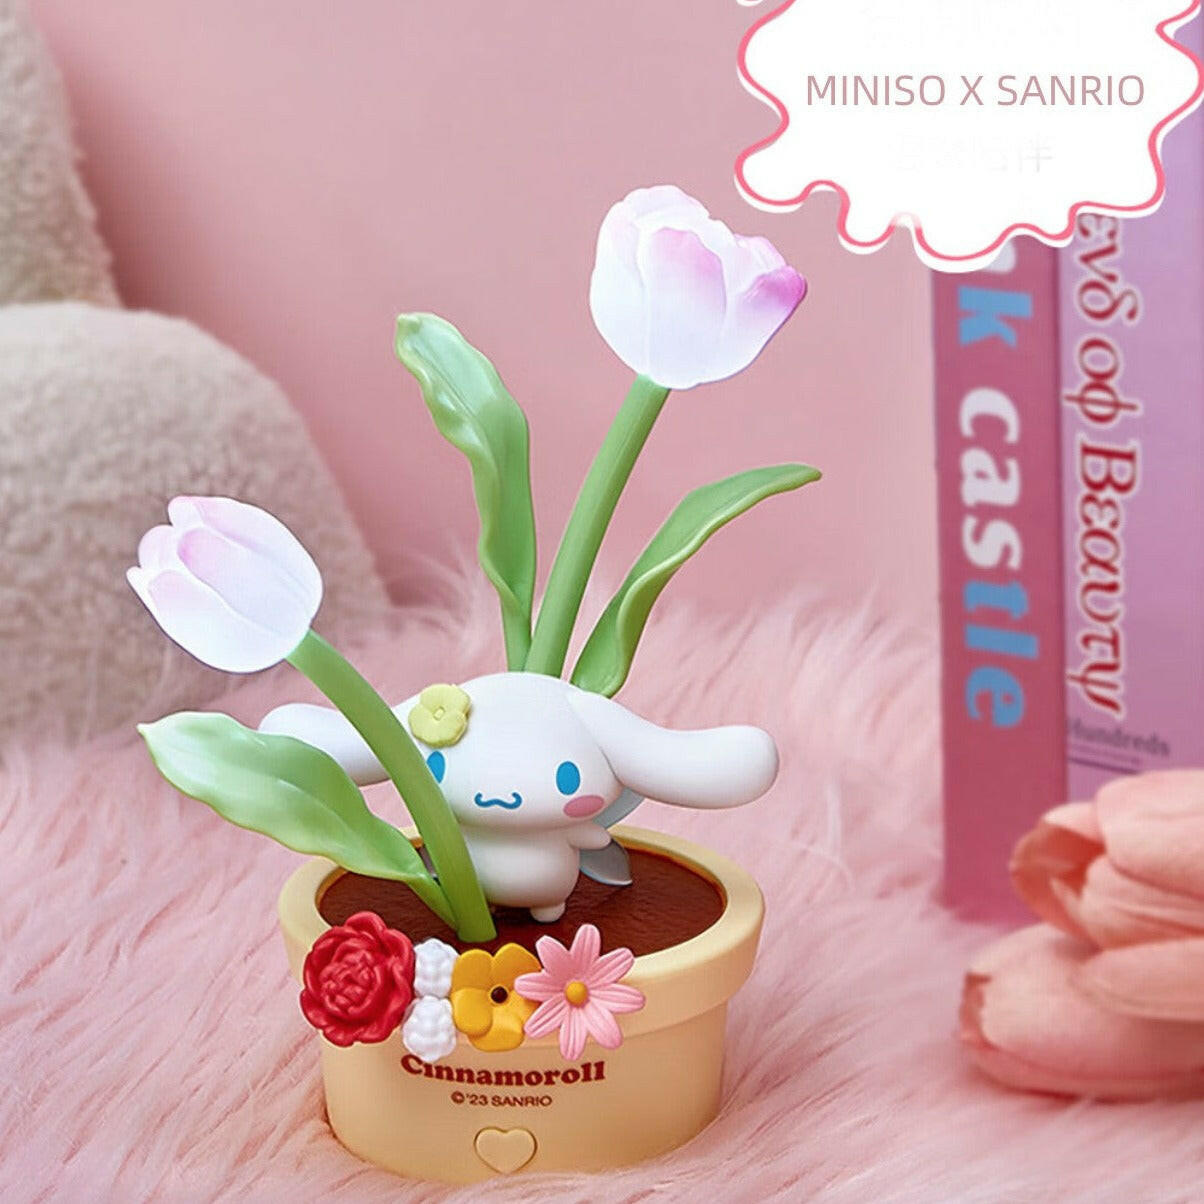 MINISO x Sanrio Flower series Nightlight - Cinnamoroll